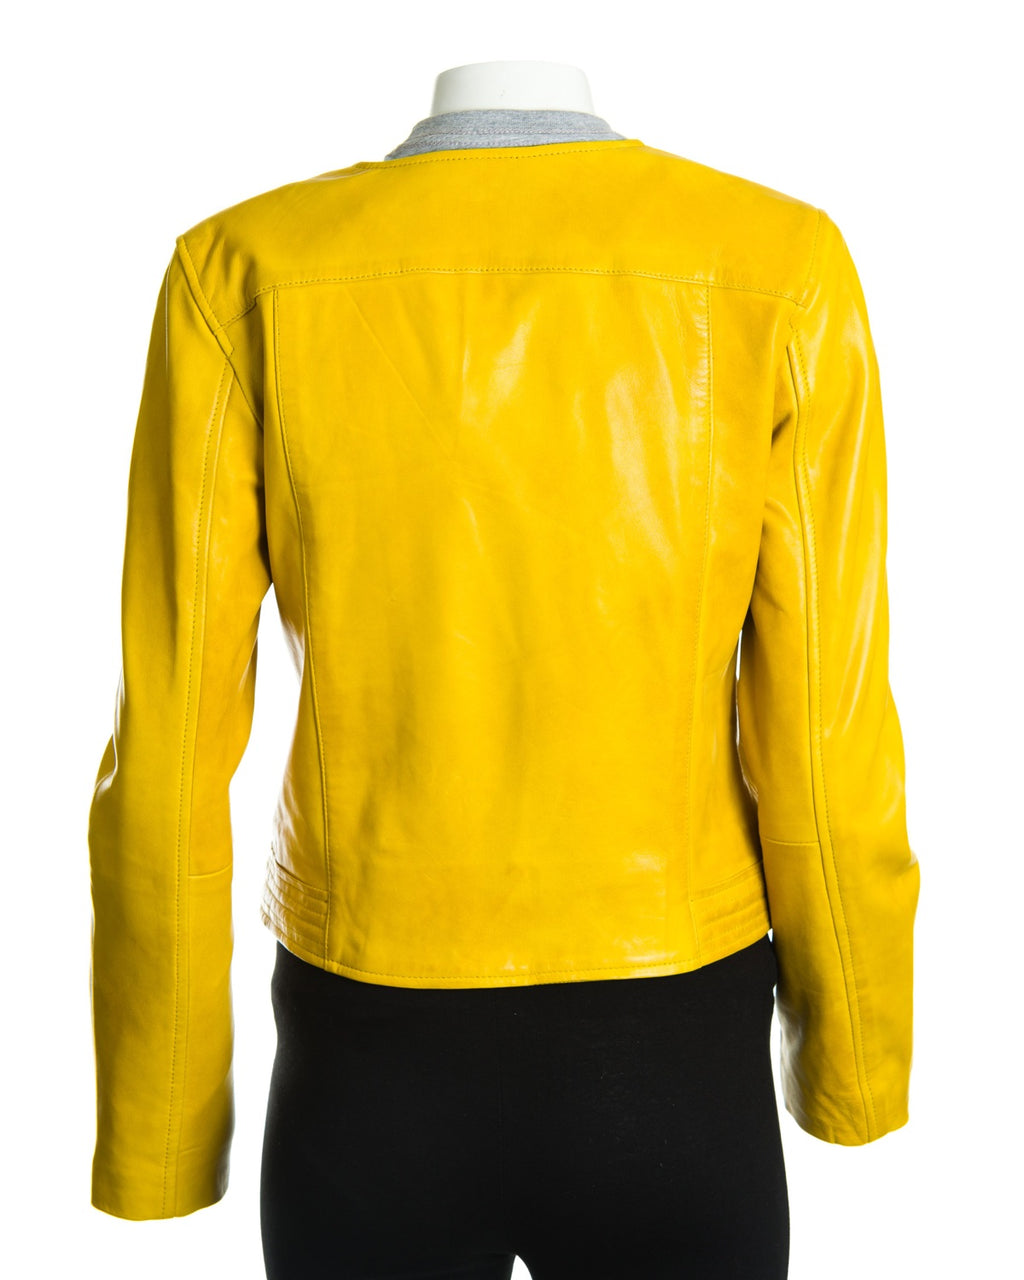 Women's Yellow Leather Collarless Cross-Zip Biker Jacket: Gia